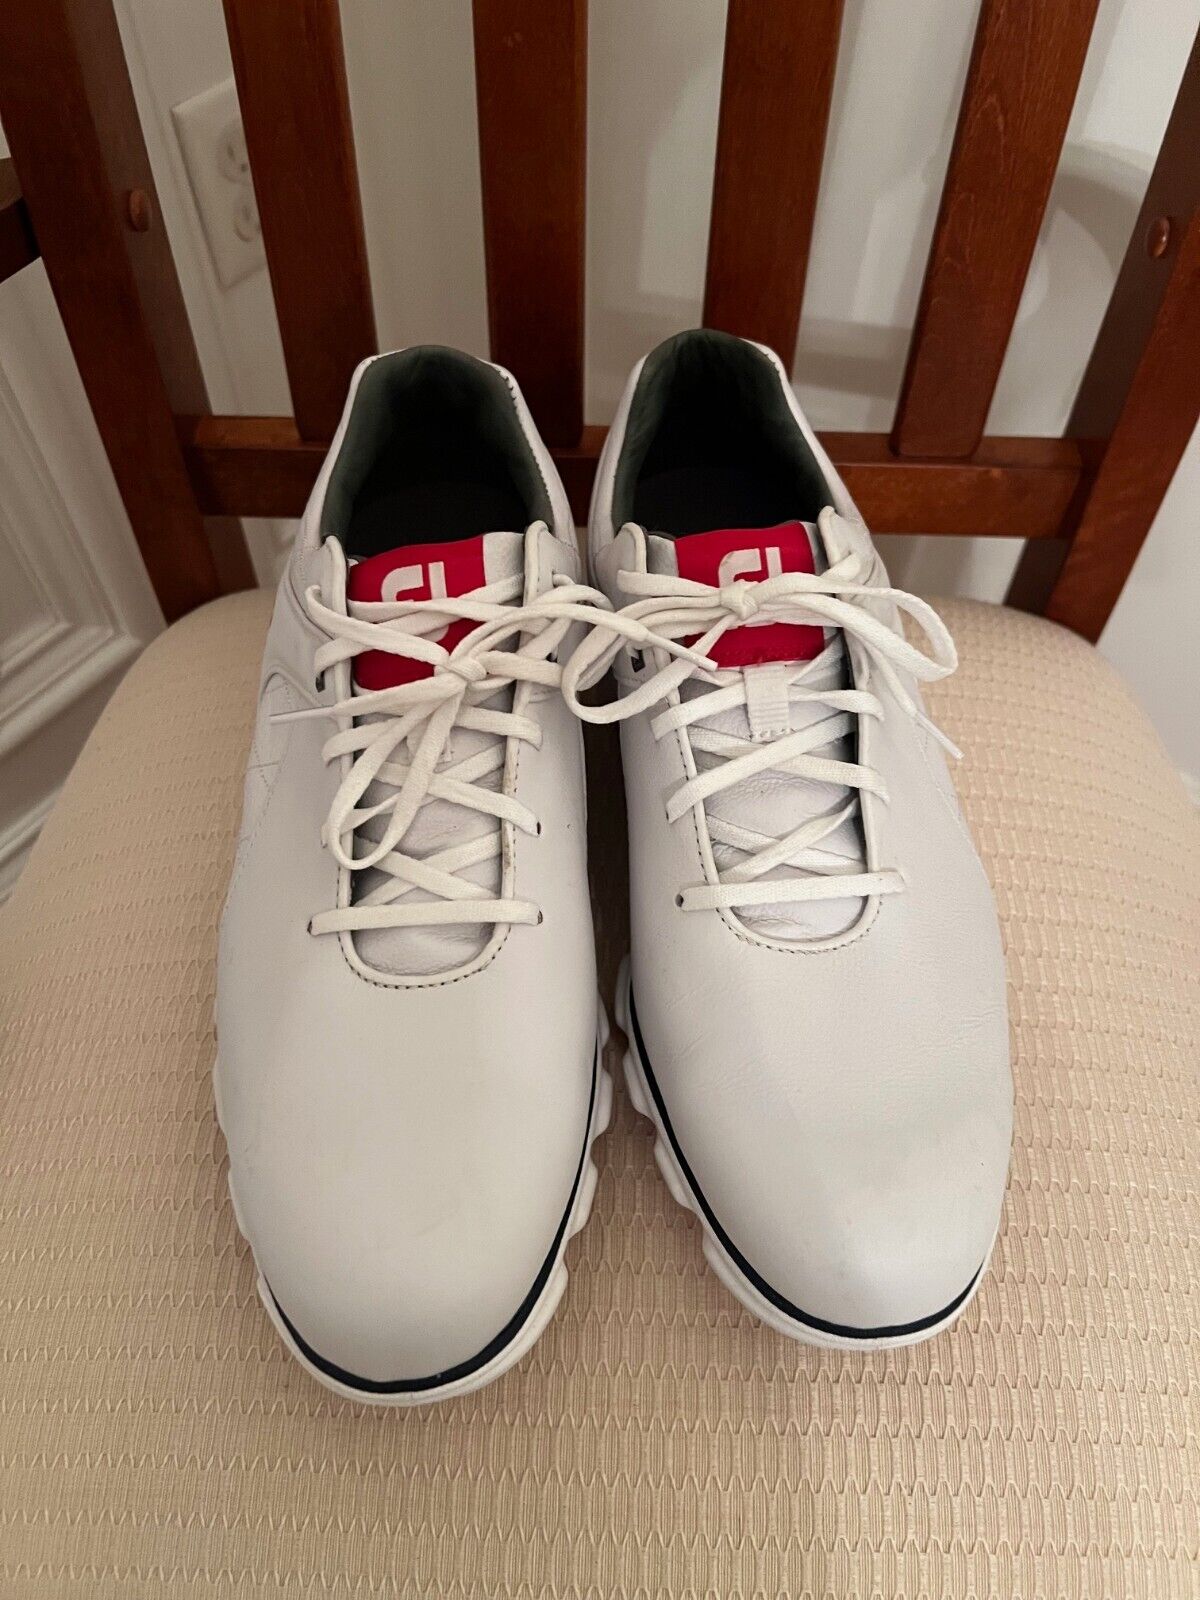 FootJoy FJ PRO SL Men\'s 10.5 W White & Red Spikeless Golf Shoes 53243